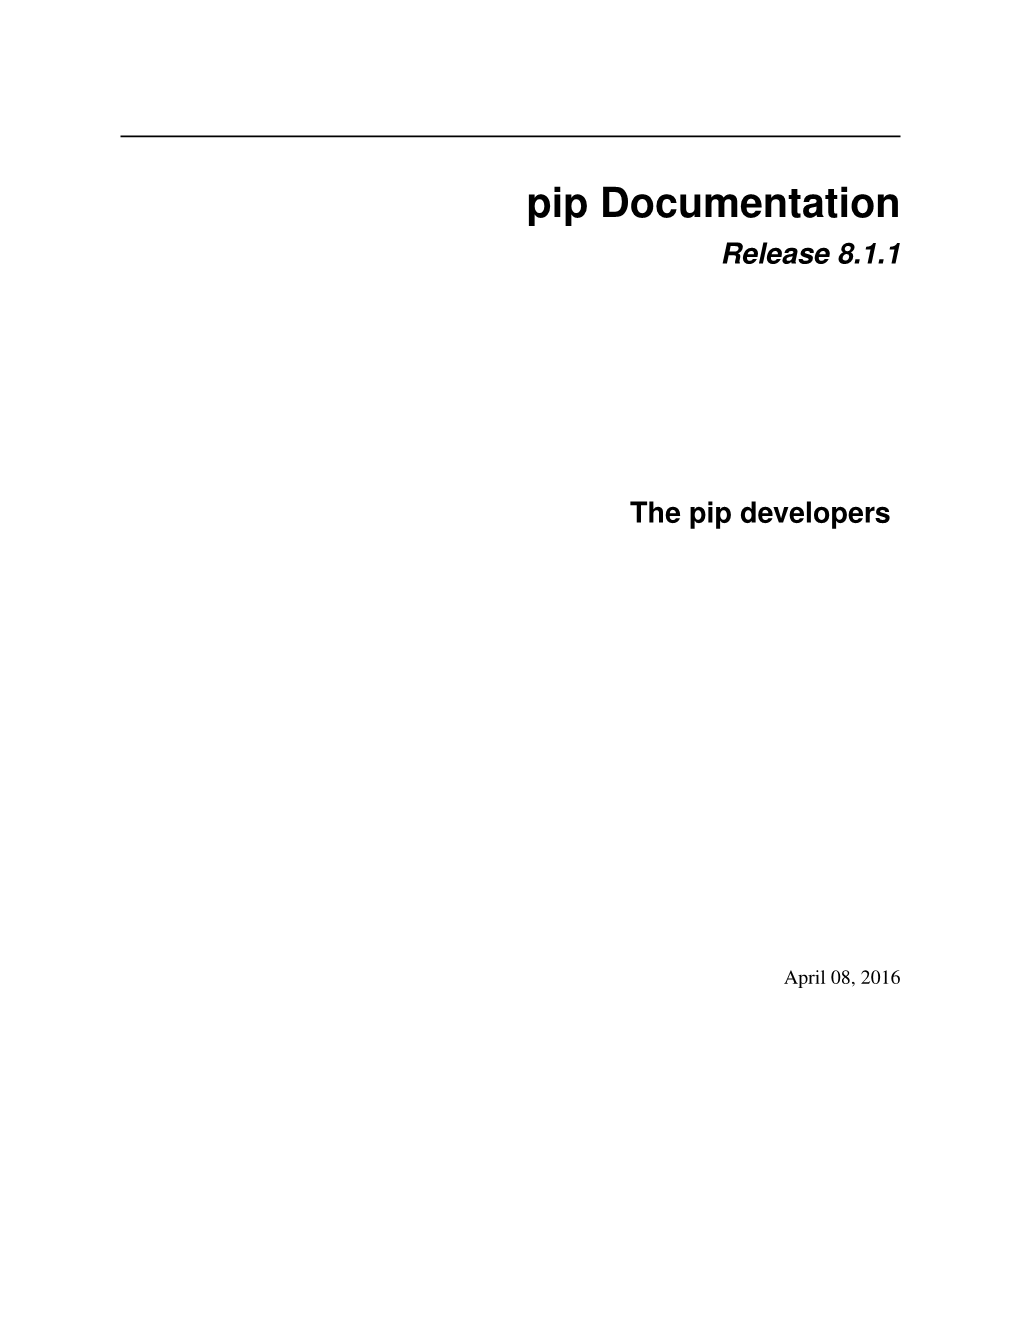 Pip Documentation Release 8.1.1